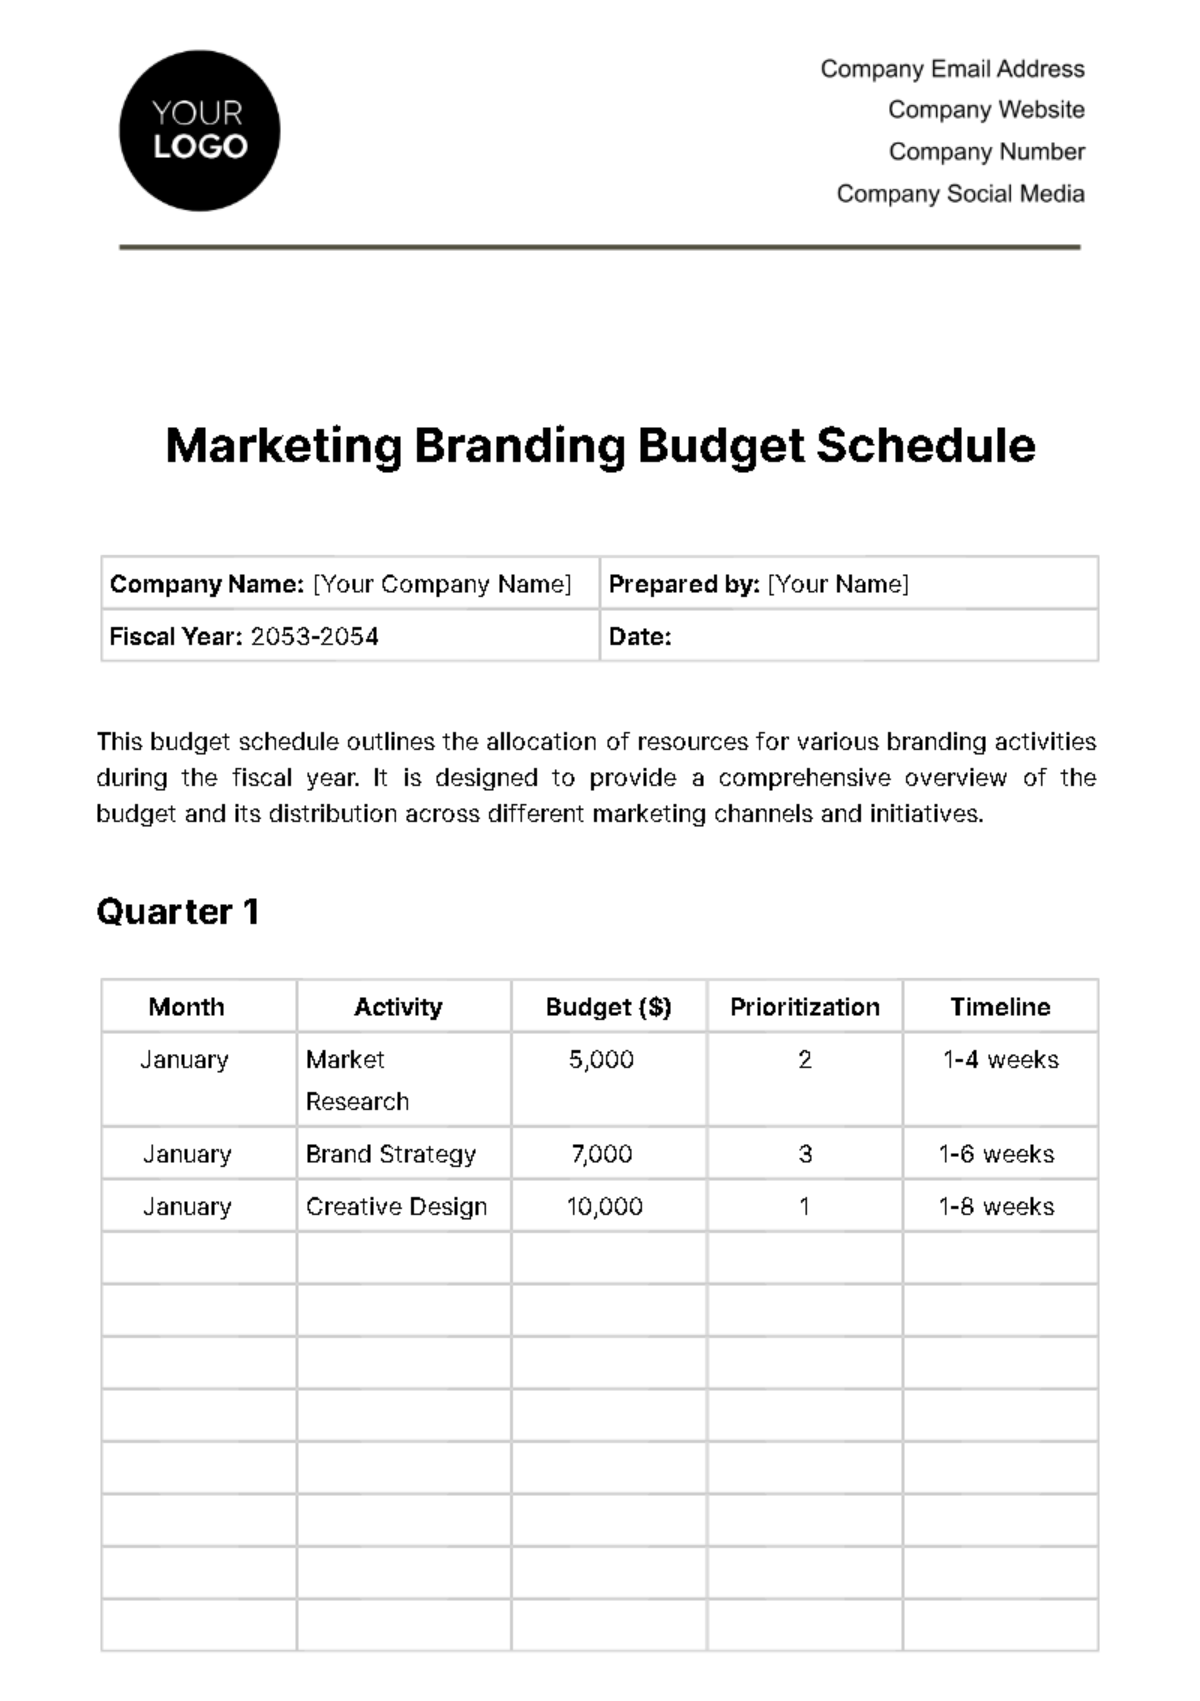 Marketing Branding Budget Schedule Template